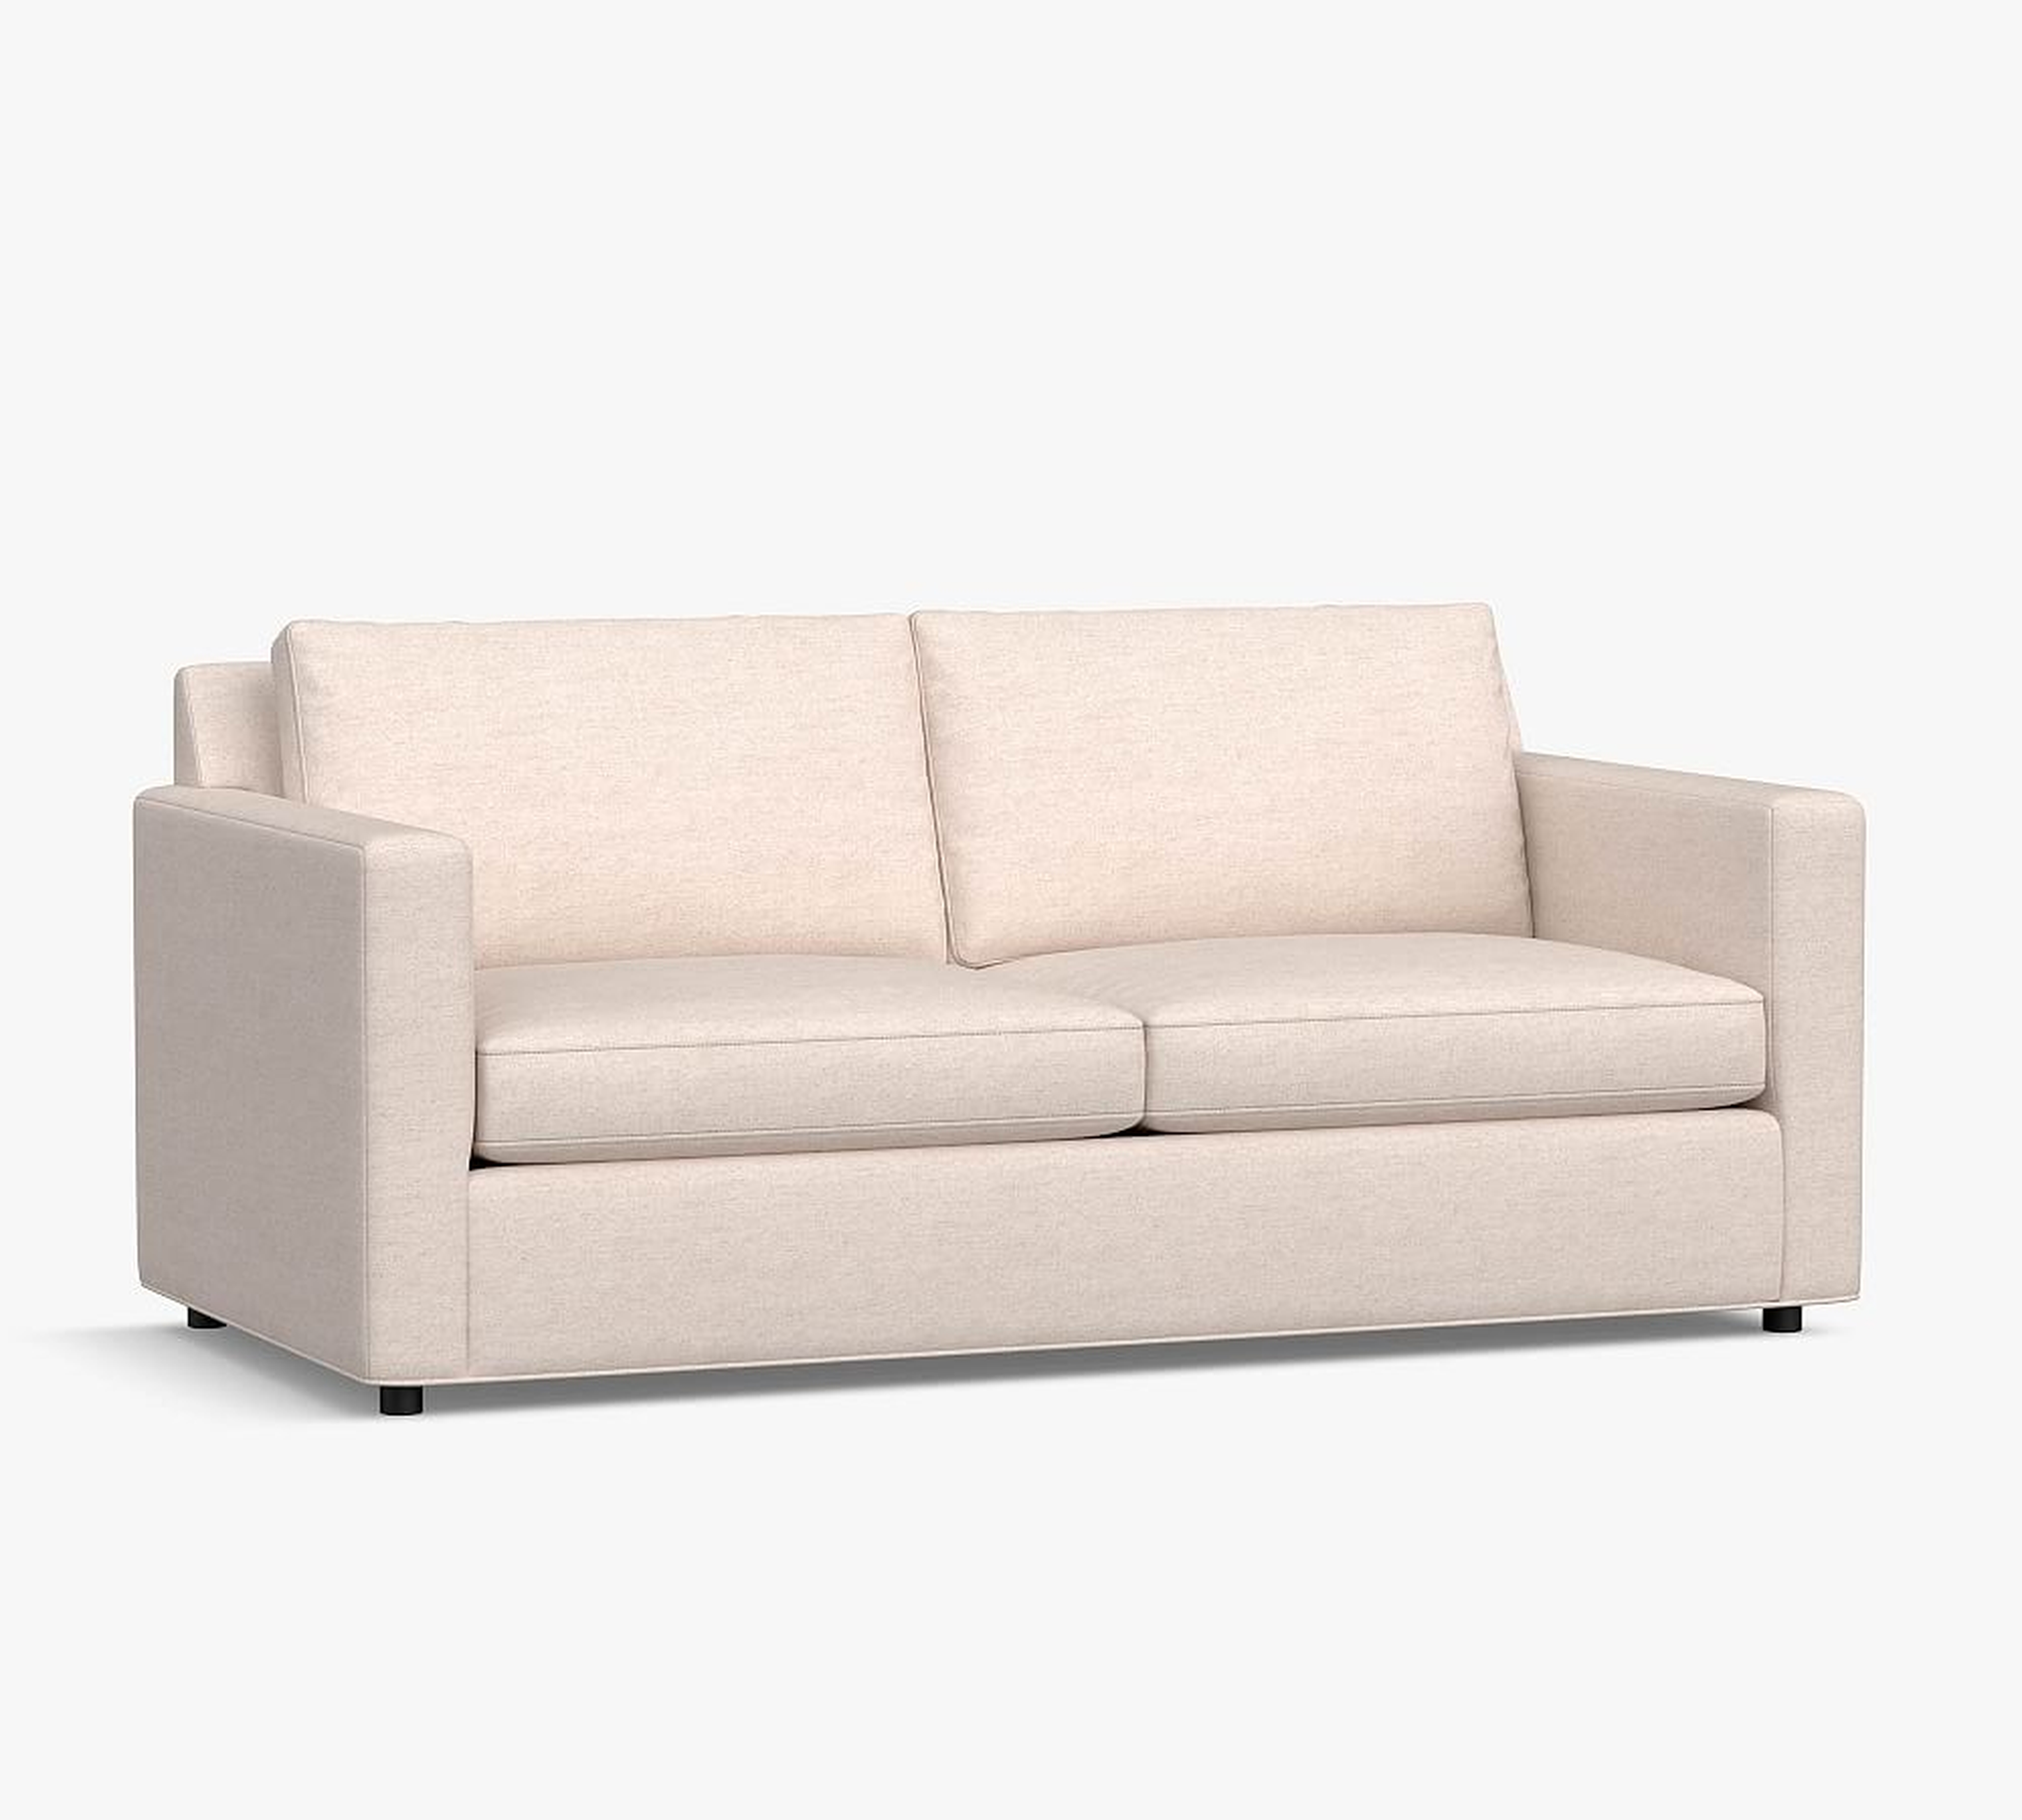 Sanford Square Arm Upholstered Sofa 74", Polyester Wrapped Cushions, Basketweave Slub Oatmeal - Pottery Barn